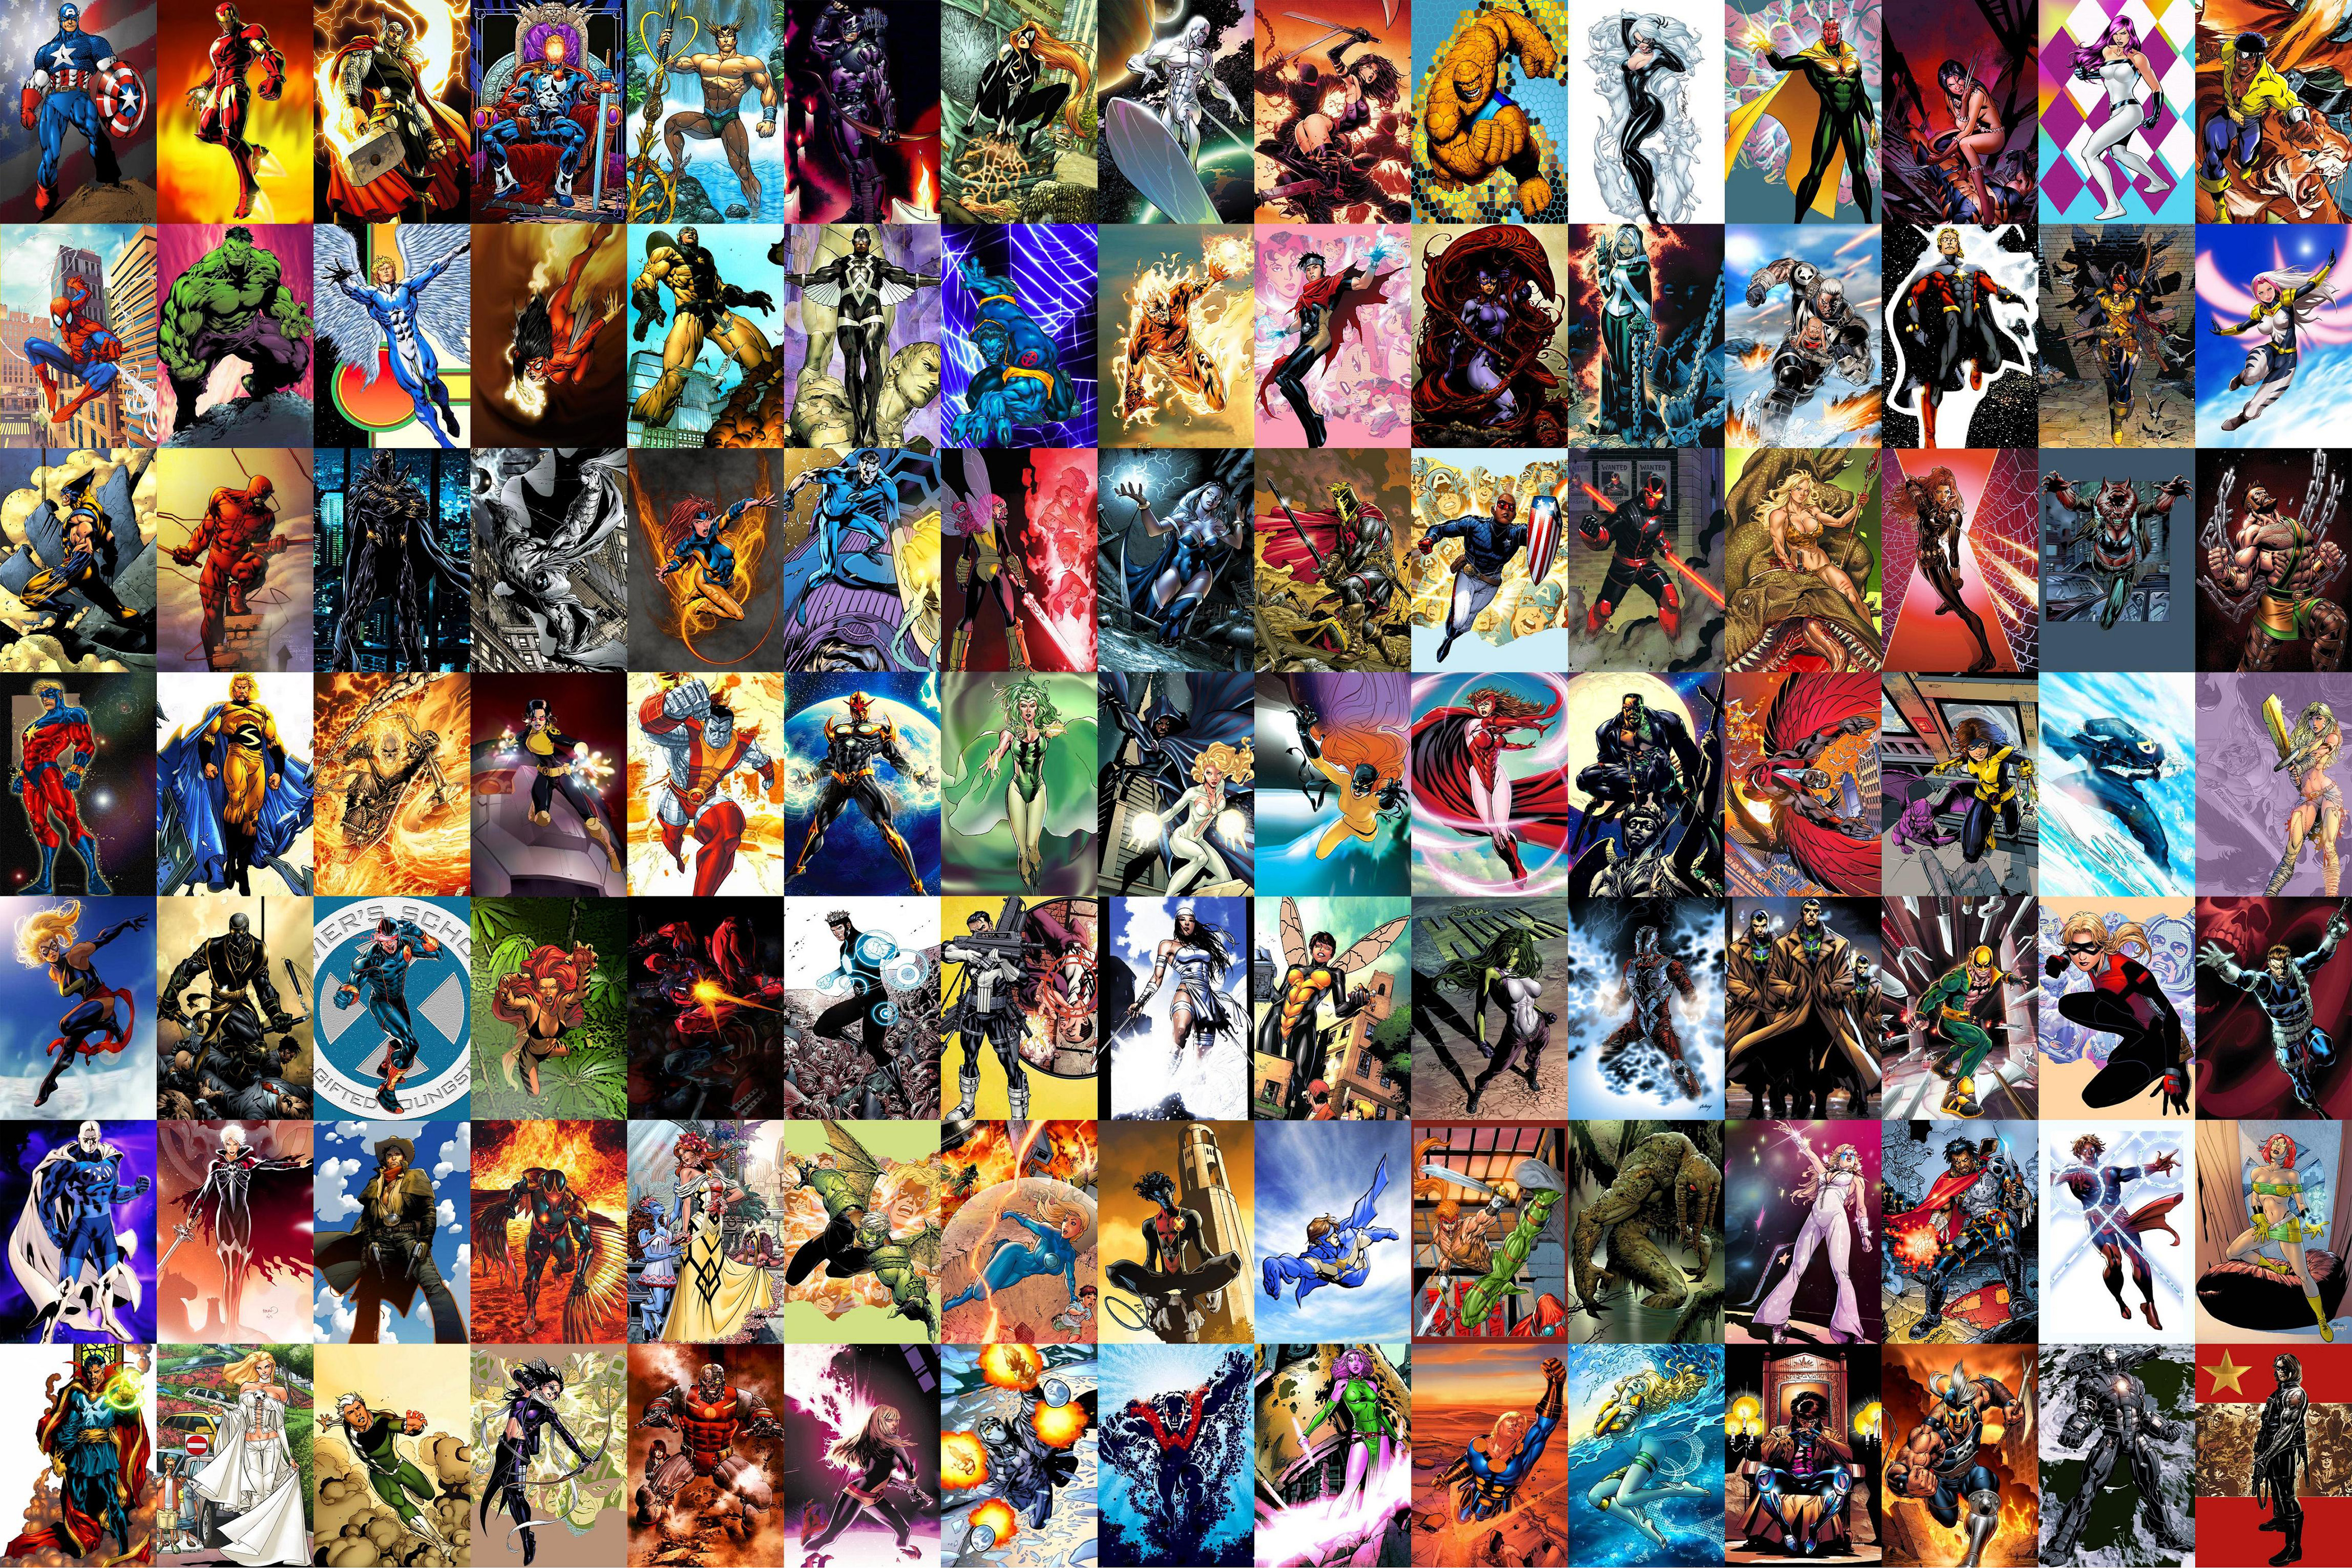 black panther (marvel comics), ms marvel, comics, marvel comics, angel (marvel comics), beast (marvel comics), ben grimm, bishop (marvel comics), black bolt, black cat (marvel comics), black widow, captain america, captain marvel, cassandra lang, cloak (marvel comics), colossus, cyclops (marvel comics), dagger (marvel comics), daredevil, dazzler (marvel comics), deadpool, deathlok, doctor strange, emma frost, falcon (marvel comics), gambit (marvel comics), ghost rider, havok (marvel comics), hawkeye, hellcat (marvel comics), hercules (marvel comics), hulk, human torch (marvel comics), invisible woman, iron fist (marvel comics), iron man, jean grey, jessica jones, johnny storm, jubilee (marvel comics), kitty pryde, lockheed (marvel comics), luke cage, magik (marvel comics), man thing, medusa (marvel comics), mister fantastic, moon knight, namor the sub mariner, nick fury, nightcrawler (marvel comics), nova (marvel comics), phoenix (marvel comics), pixie (marvel comics), power man, psylocke (marvel comics), punisher, quicksilver (marvel comics), rachel summers, reed richards, rogue (marvel comics), scarlet witch, sentinel (marvel comics), sentry (marvel comics), shanna the she devil, she hulk, silver surfer, spider man, spider woman, storm (marvel comics), sub mariner, susan storm, t'challa, the cat (marvel comics), thing (marvel comics), thor, tigra (marvel comics), vision (marvel comics), war machine, wasp (marvel comics), white witch (marvel comics), wiccan (marvel comics), winter soldier, wolverine, wonder man, x 23, yellowjacket (marvel comics)